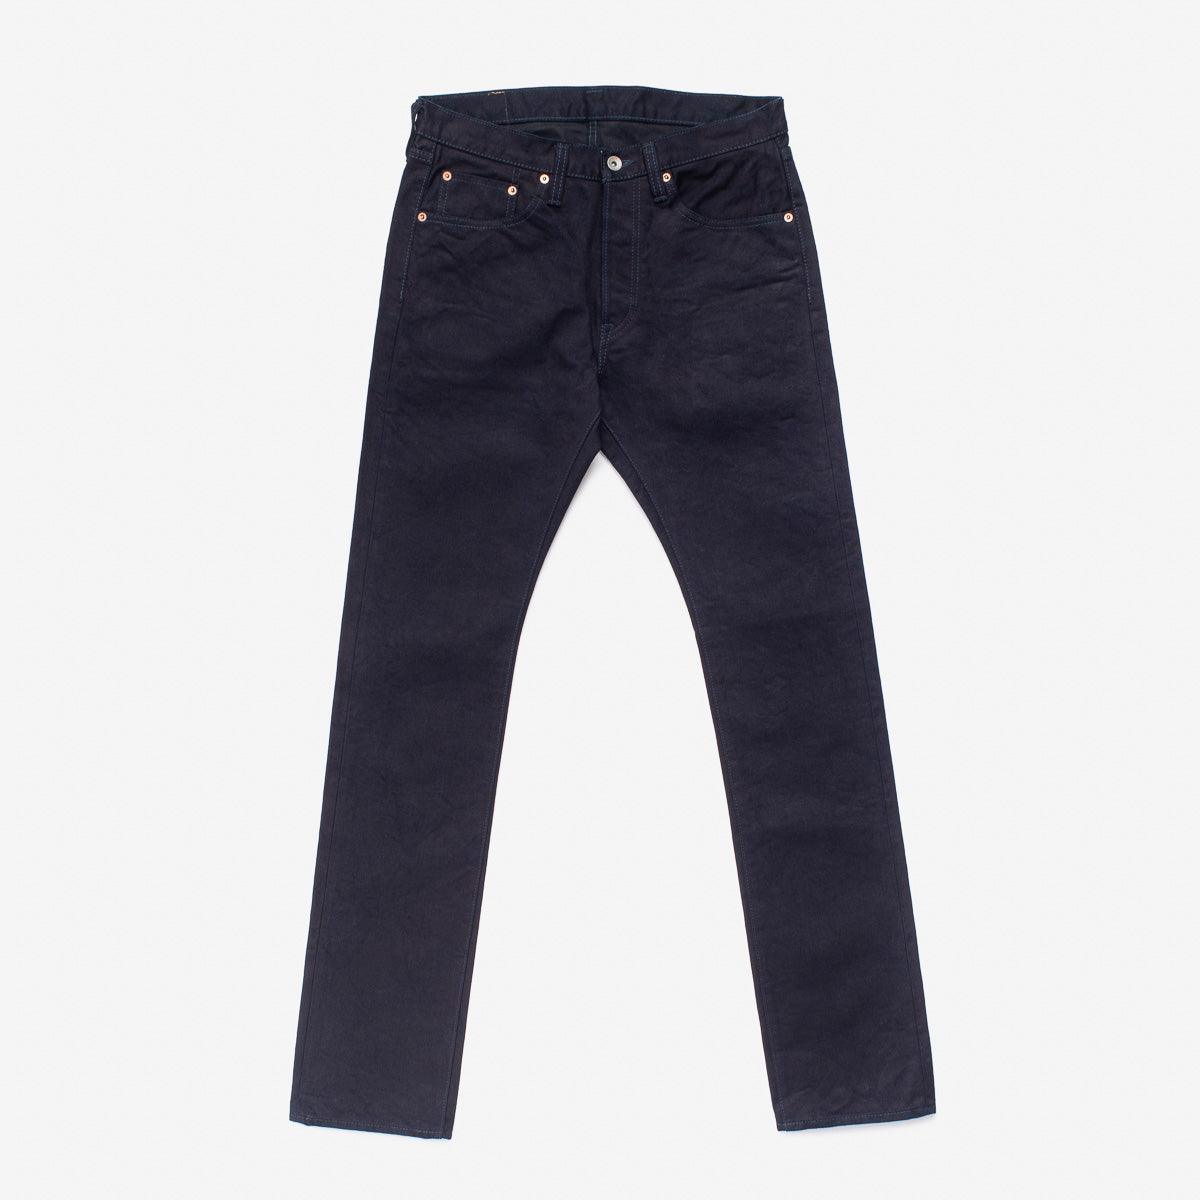 IH-555S-142ib - 14oz Selvedge Denim Super Slim Cut Jeans Indigo/Black